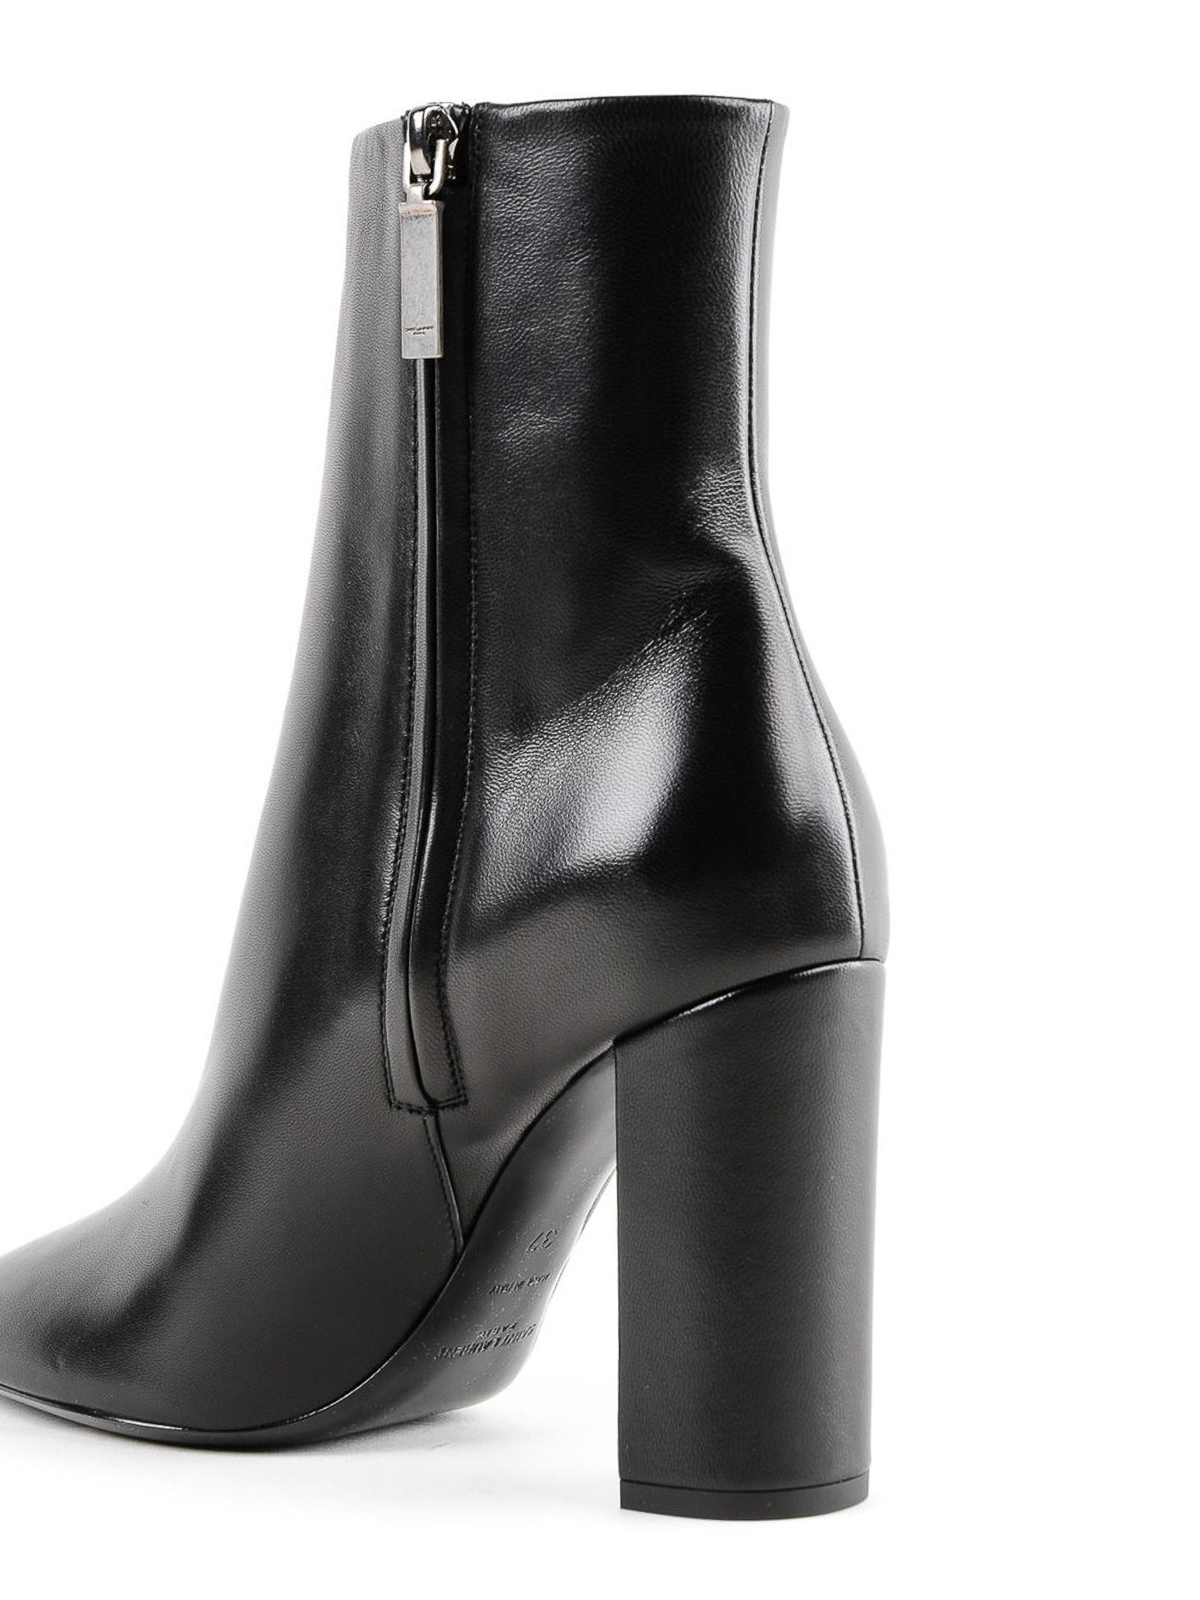 leather high heel booties